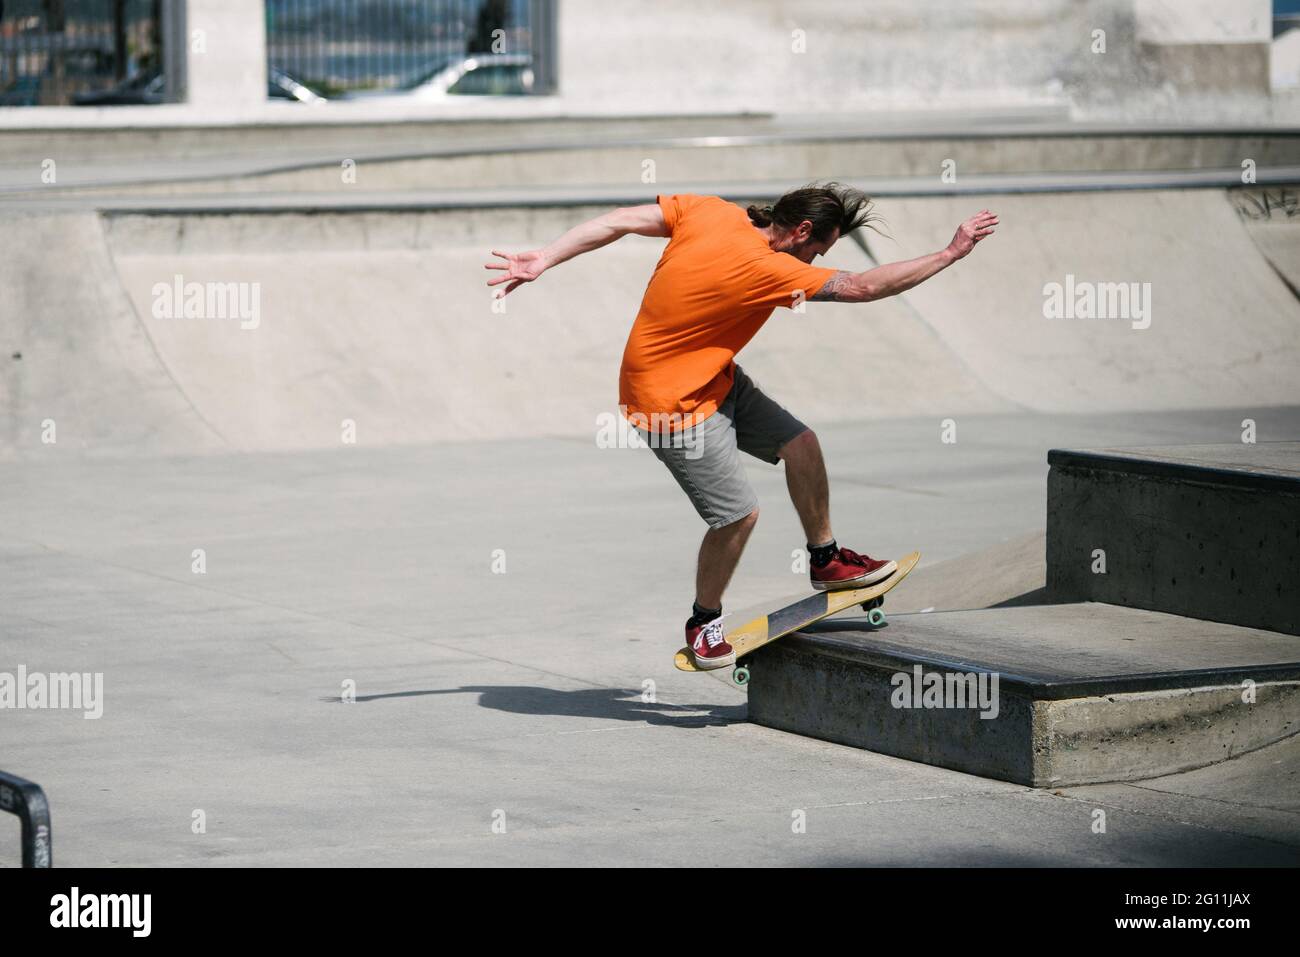 USA, Kalifornien, Ventura, man Skateboarding im Skatepark Stockfoto